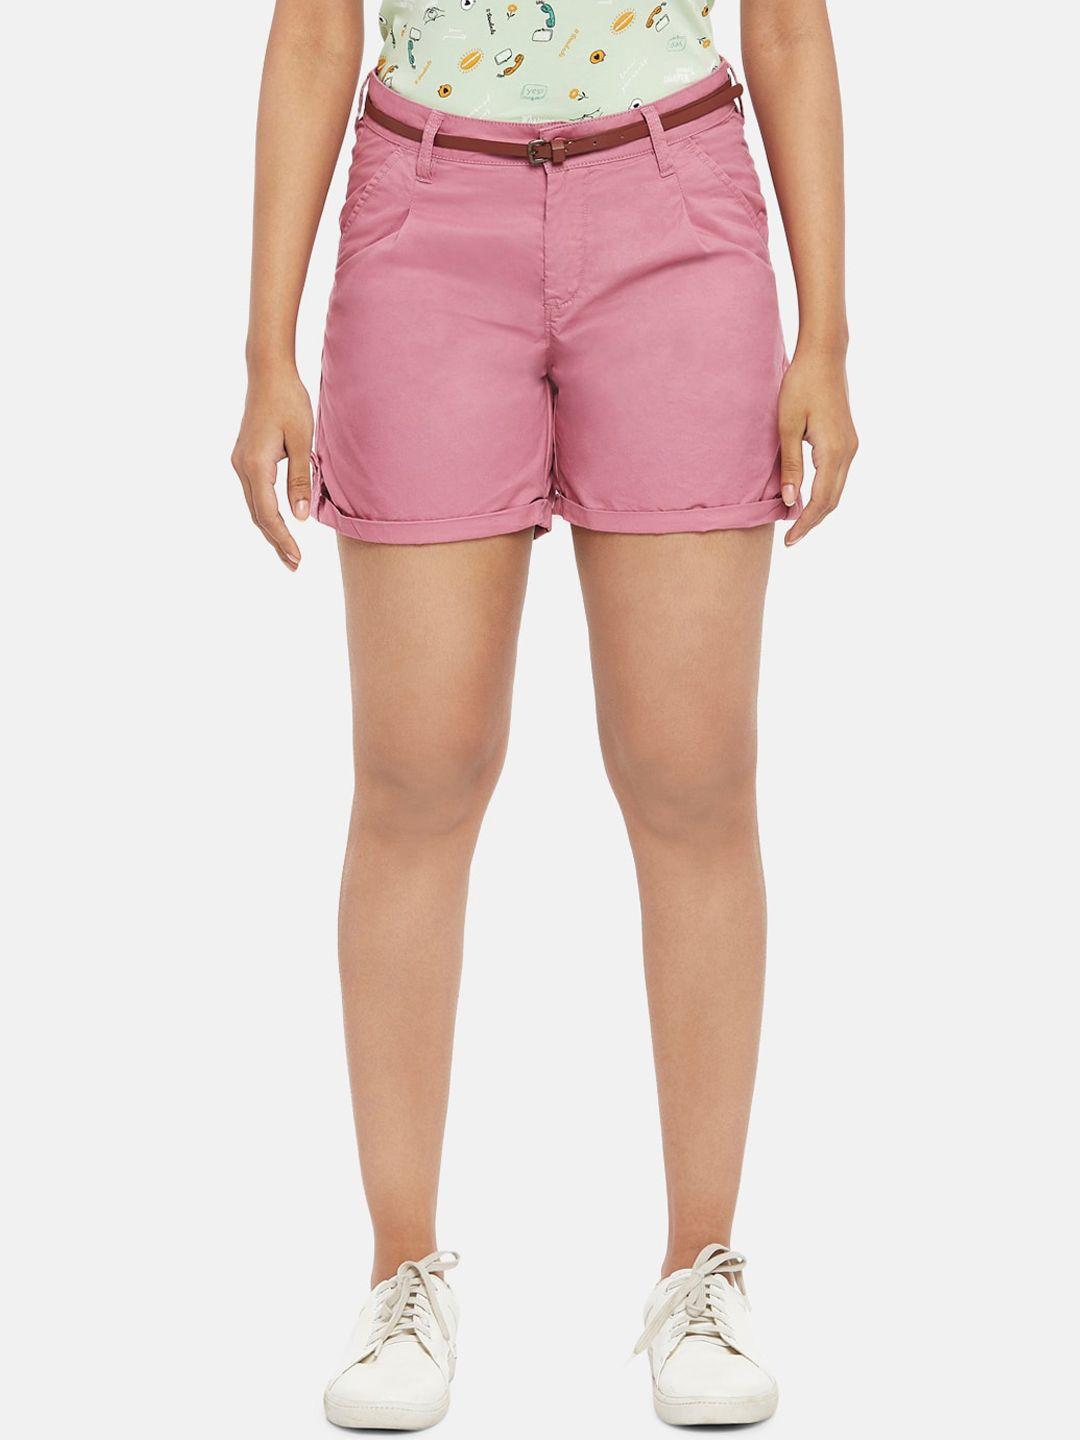 honey by pantaloons women pink regular shorts